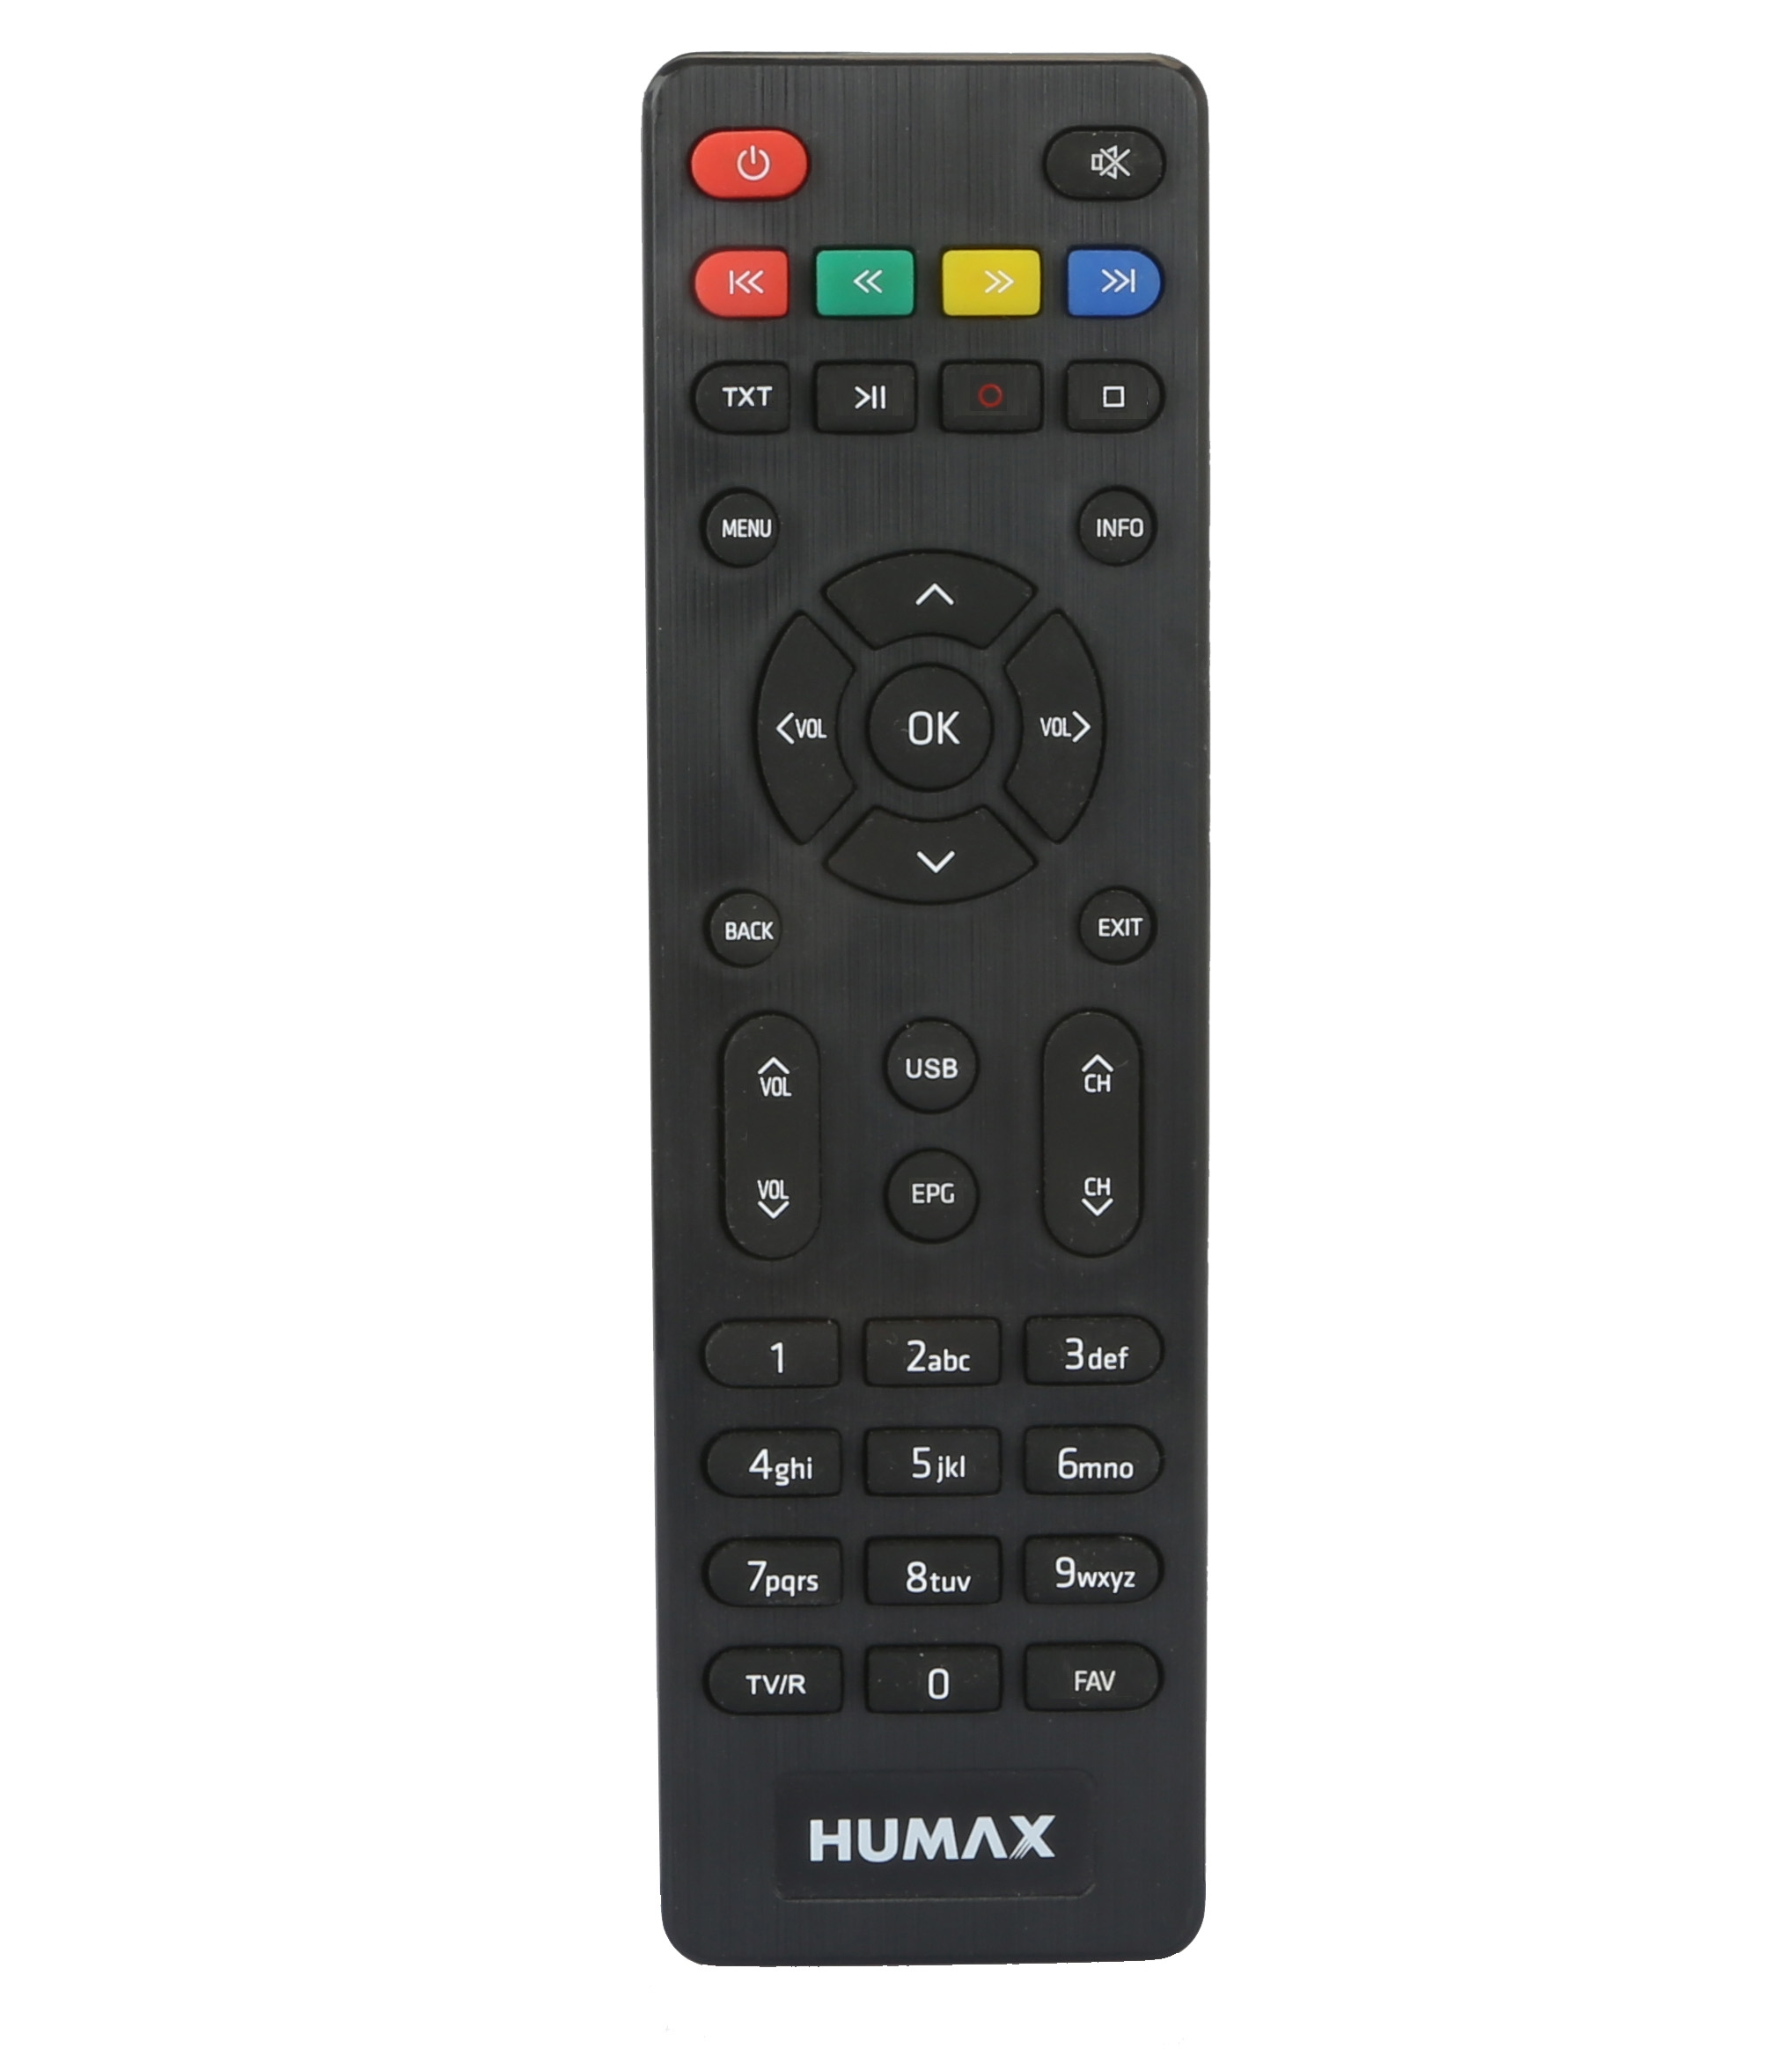 (HDTV, schwarz) Satellitenreceiver HD HUMAX NANO